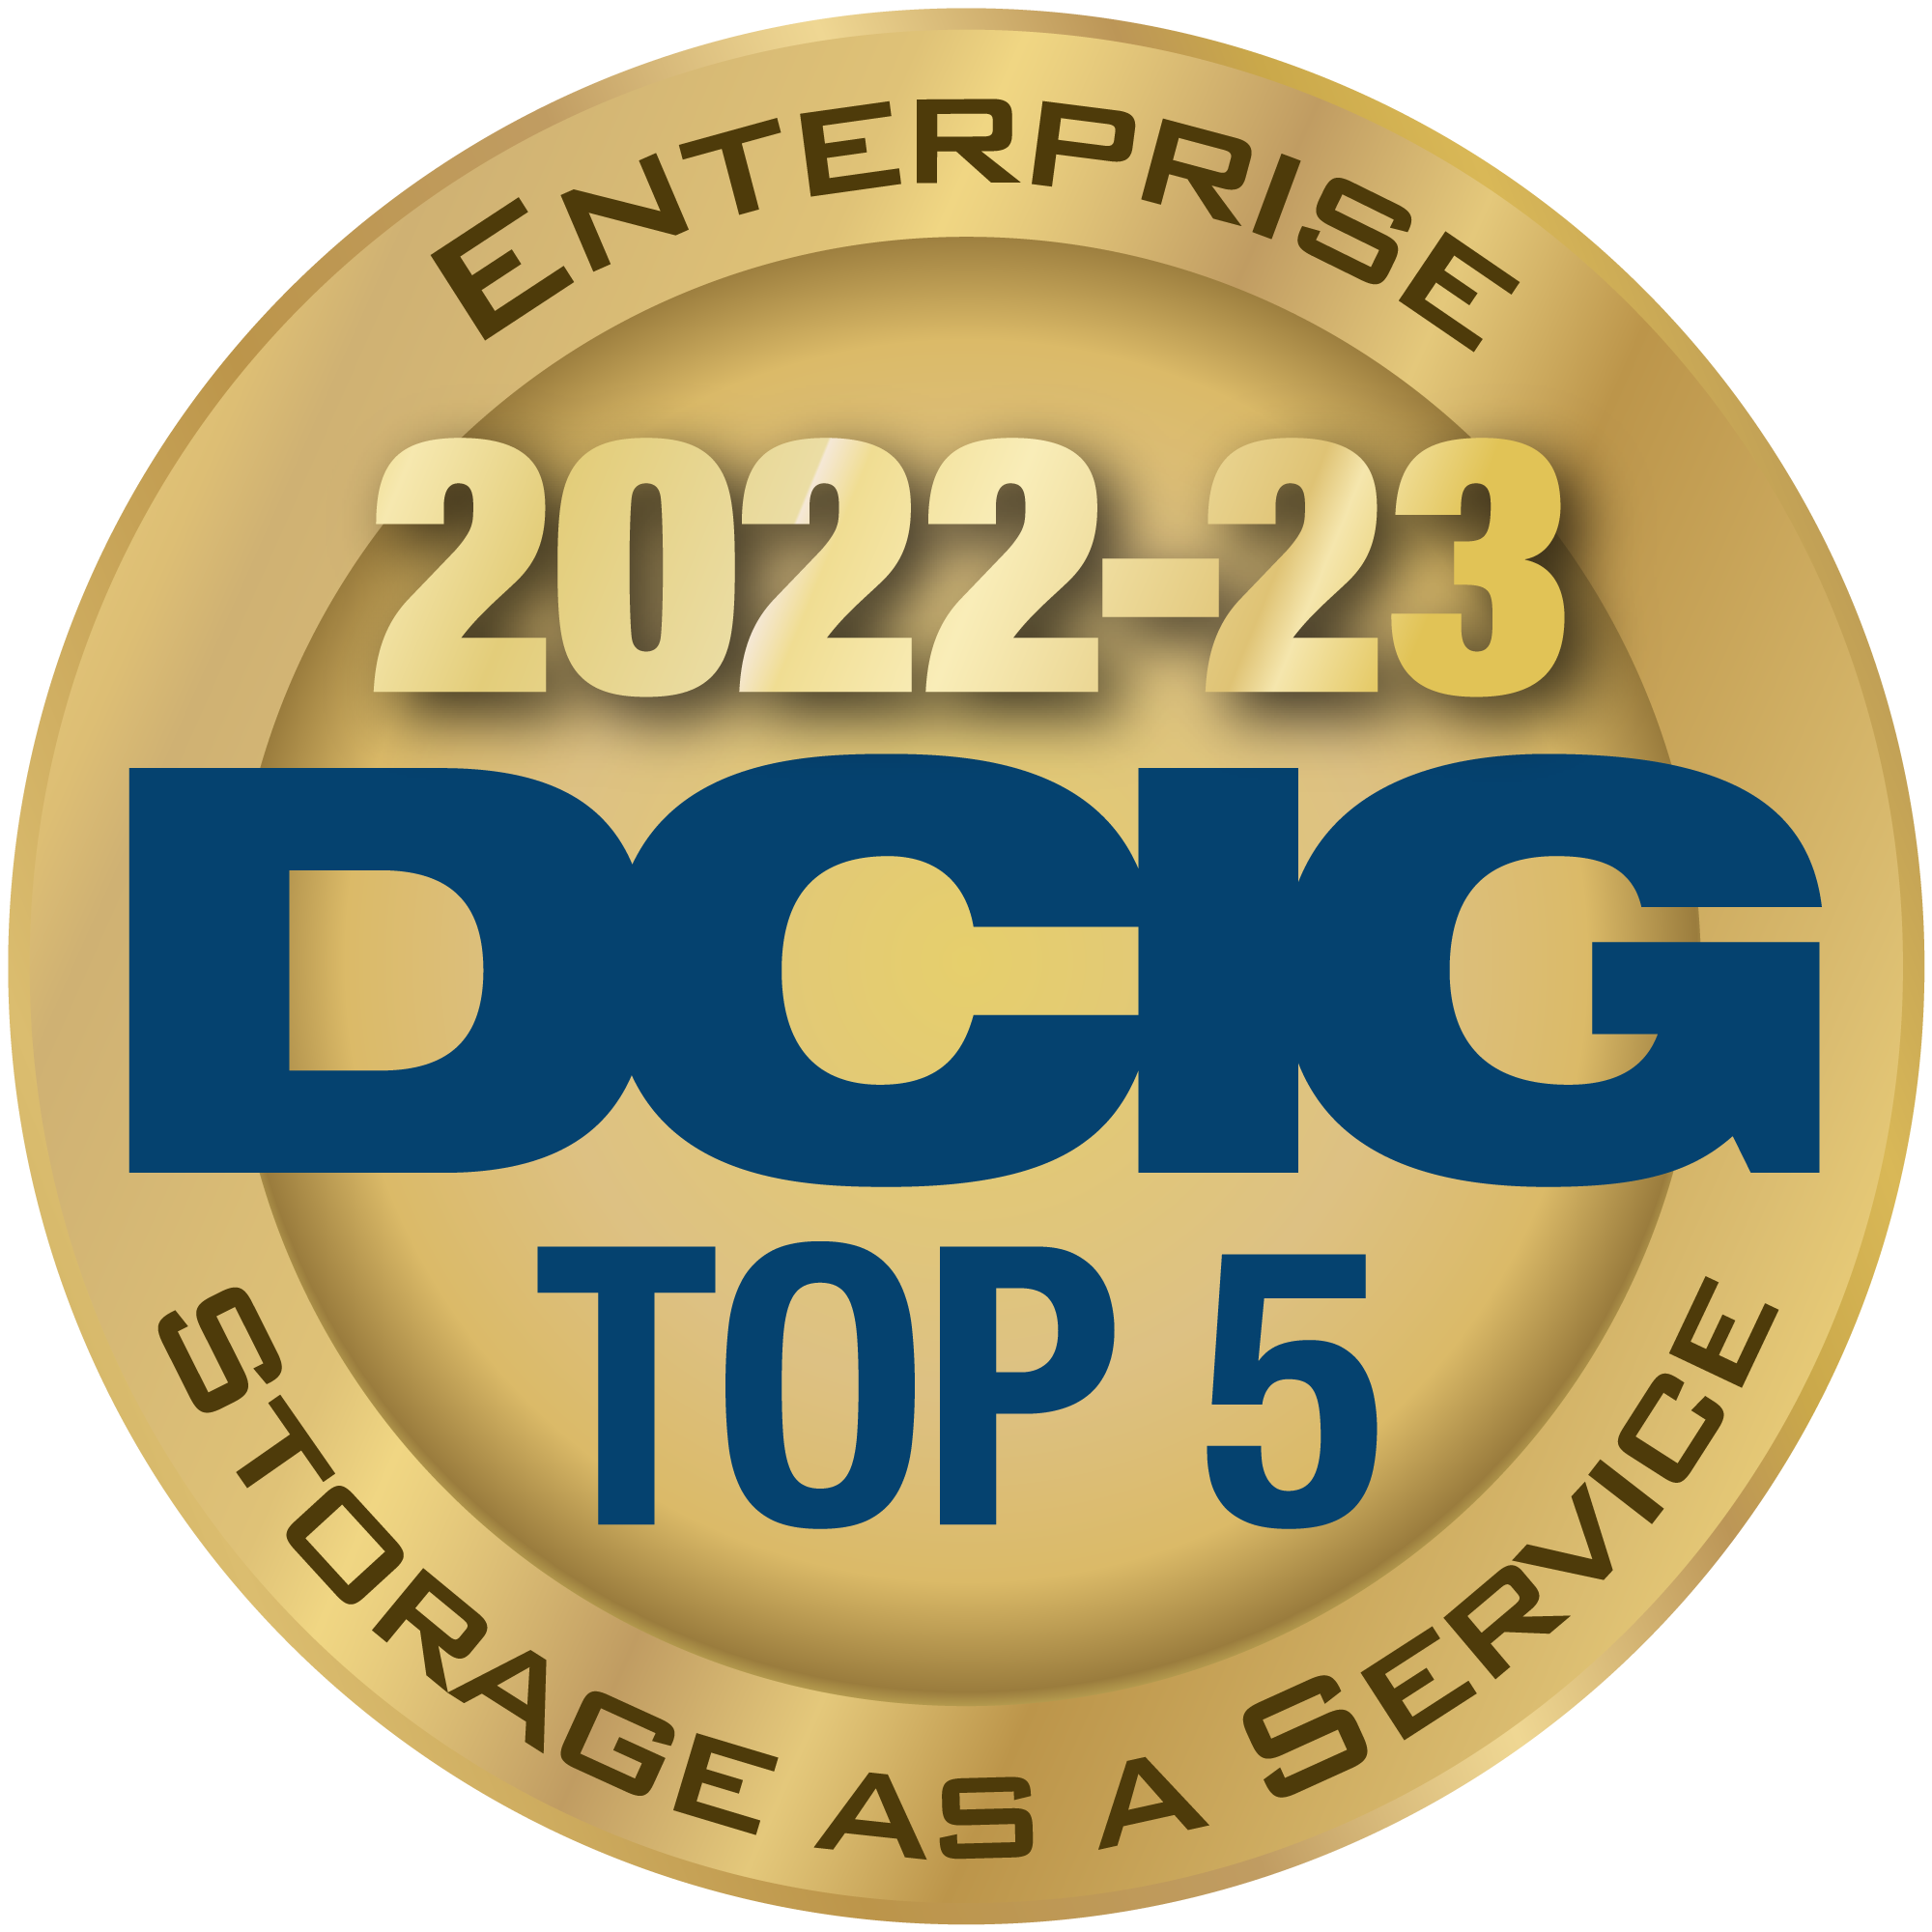 DCIG-2022-23-TOP-5-Enterprise-Storage-as-a-Service-Icon-2000.png